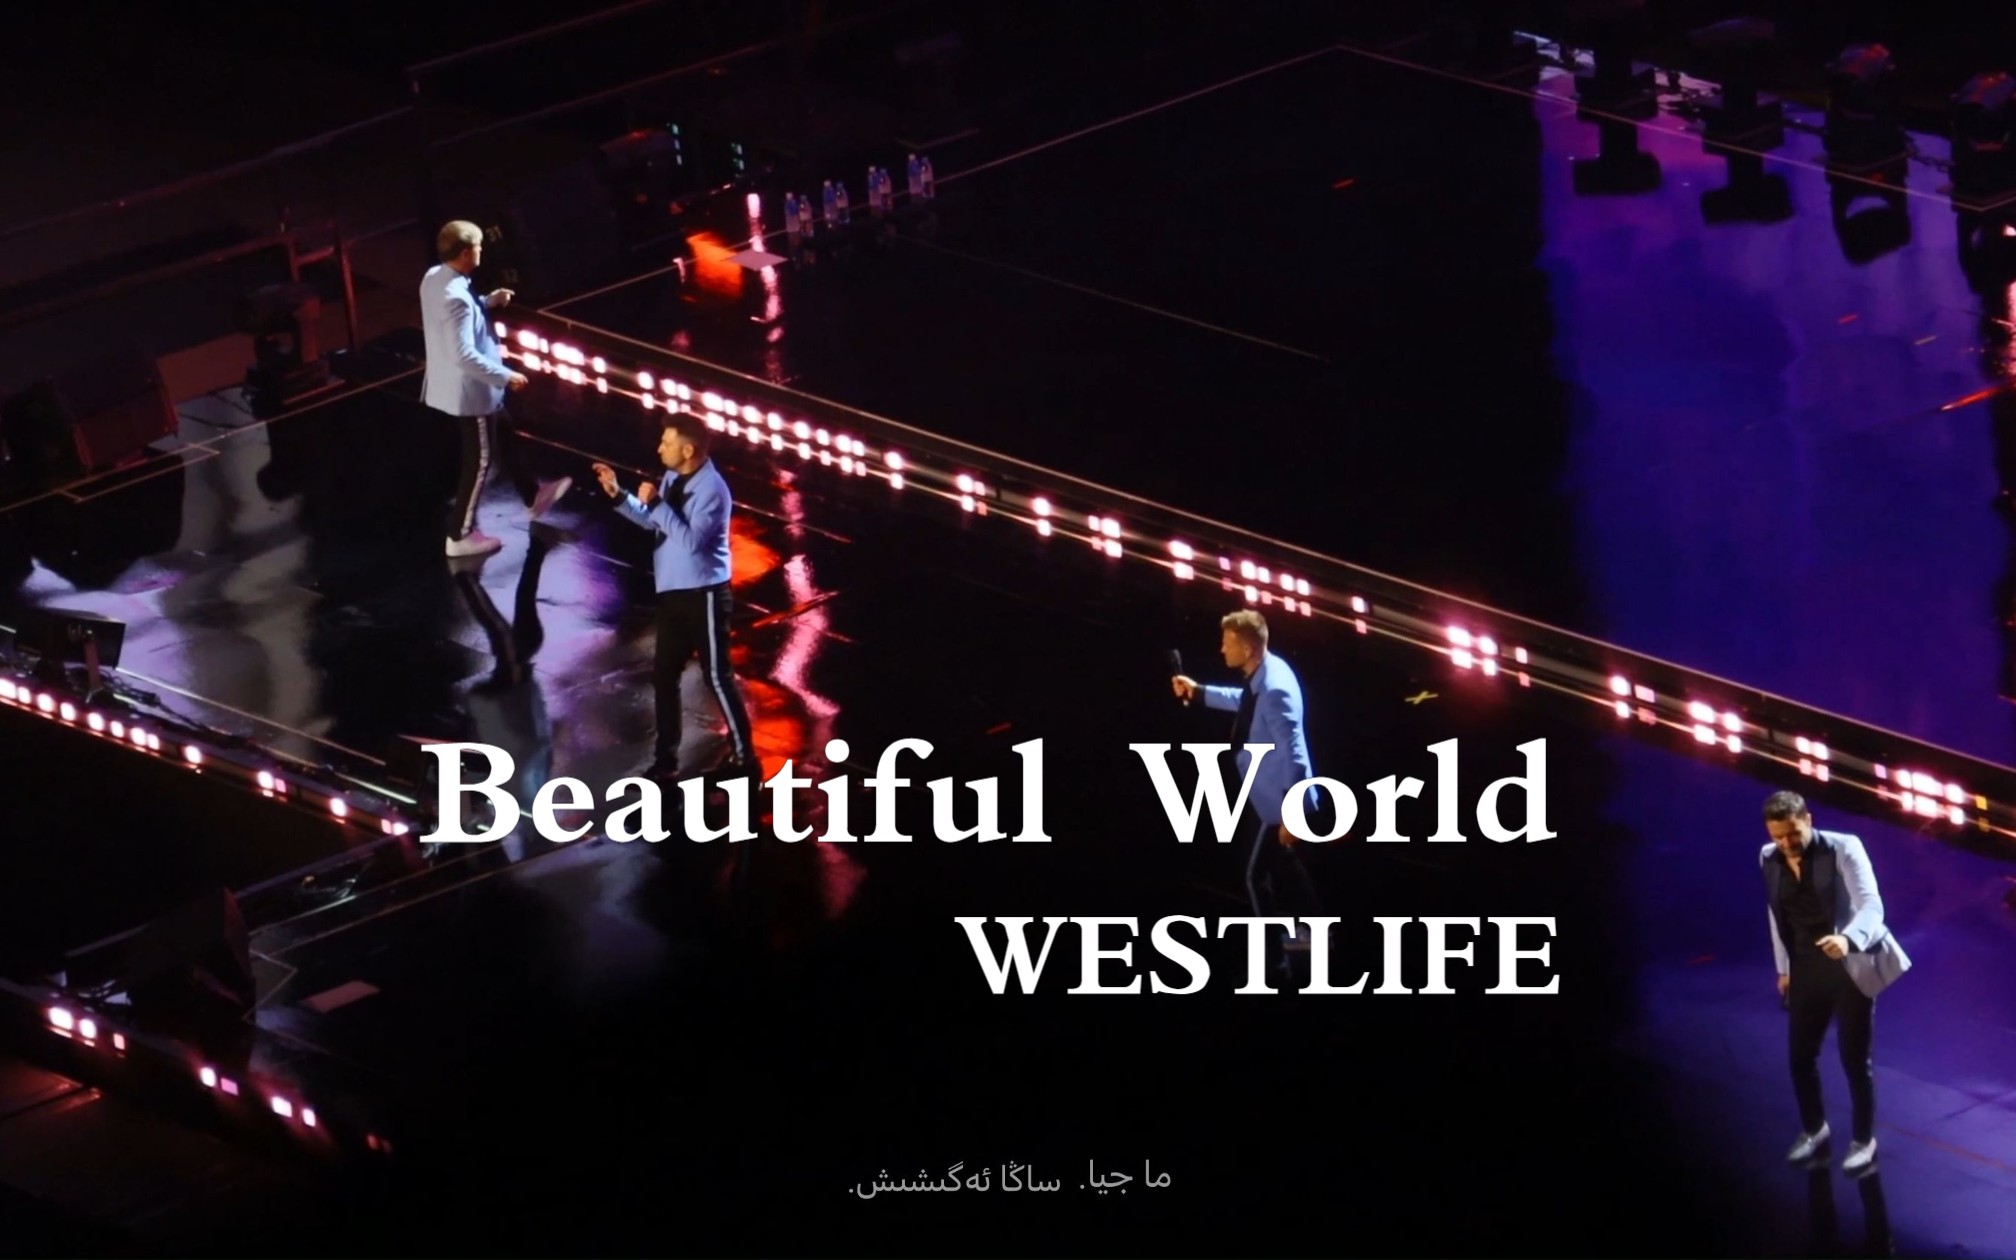 【Westlife/西城男孩】据说还是一首中国粉丝限定 Beautiful World